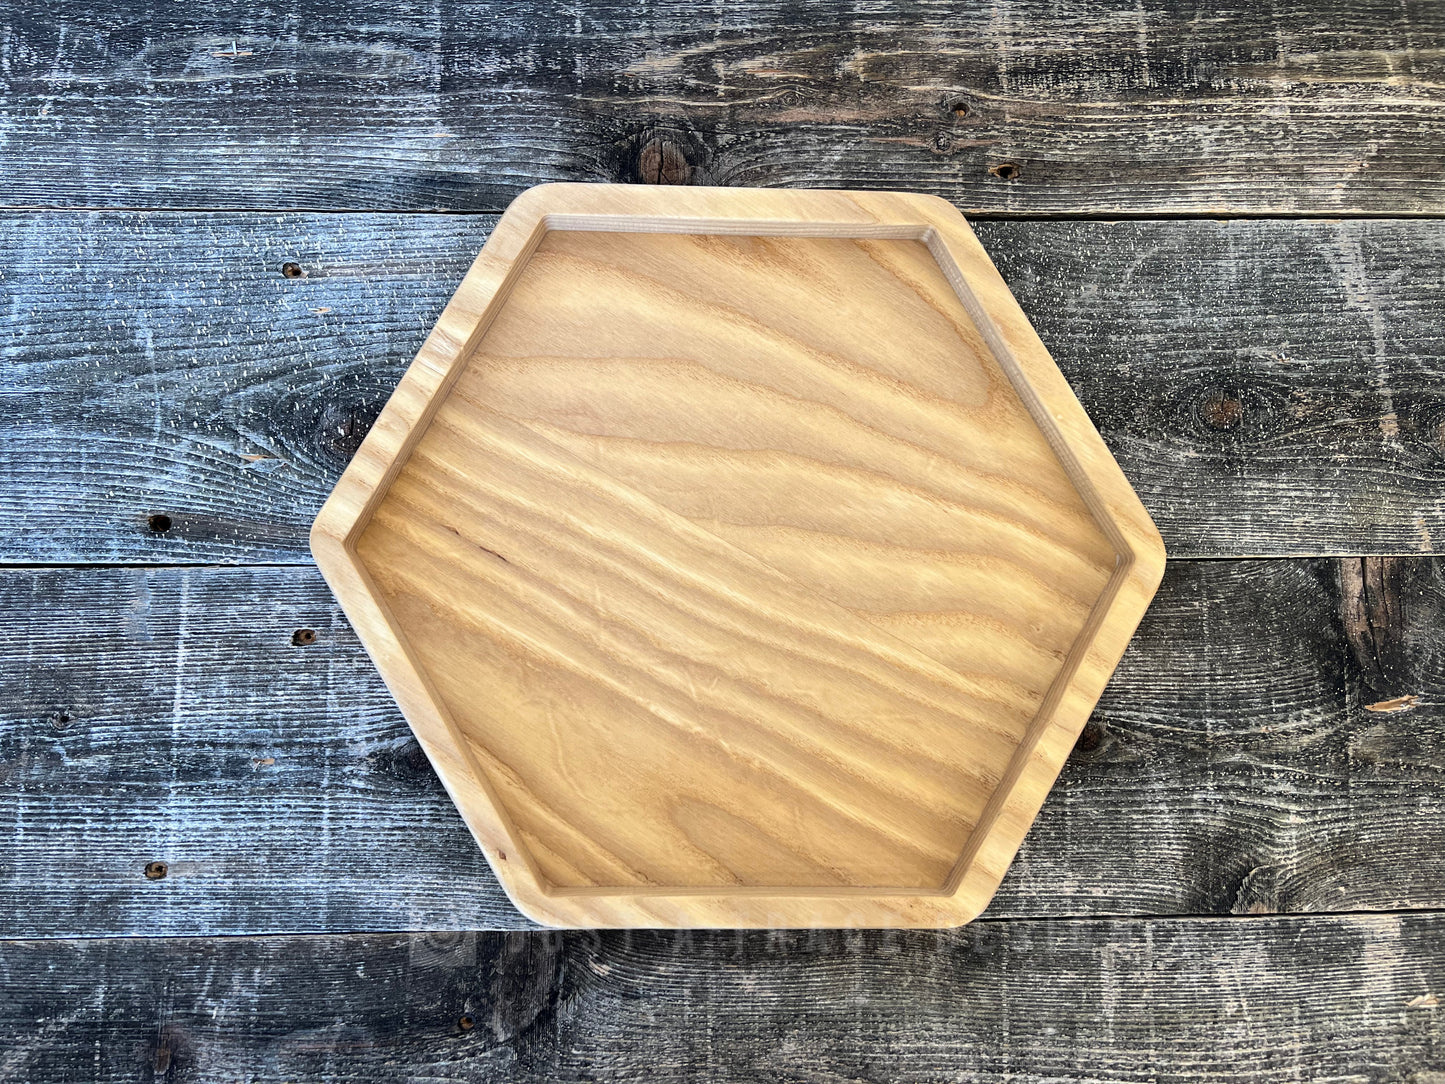 12" Hexagon Ash Hardwood Tray, Charcuterie Board, Coffee Table, Ottoman Tray, Wood Platter, Serving Tray, Wedding Gift